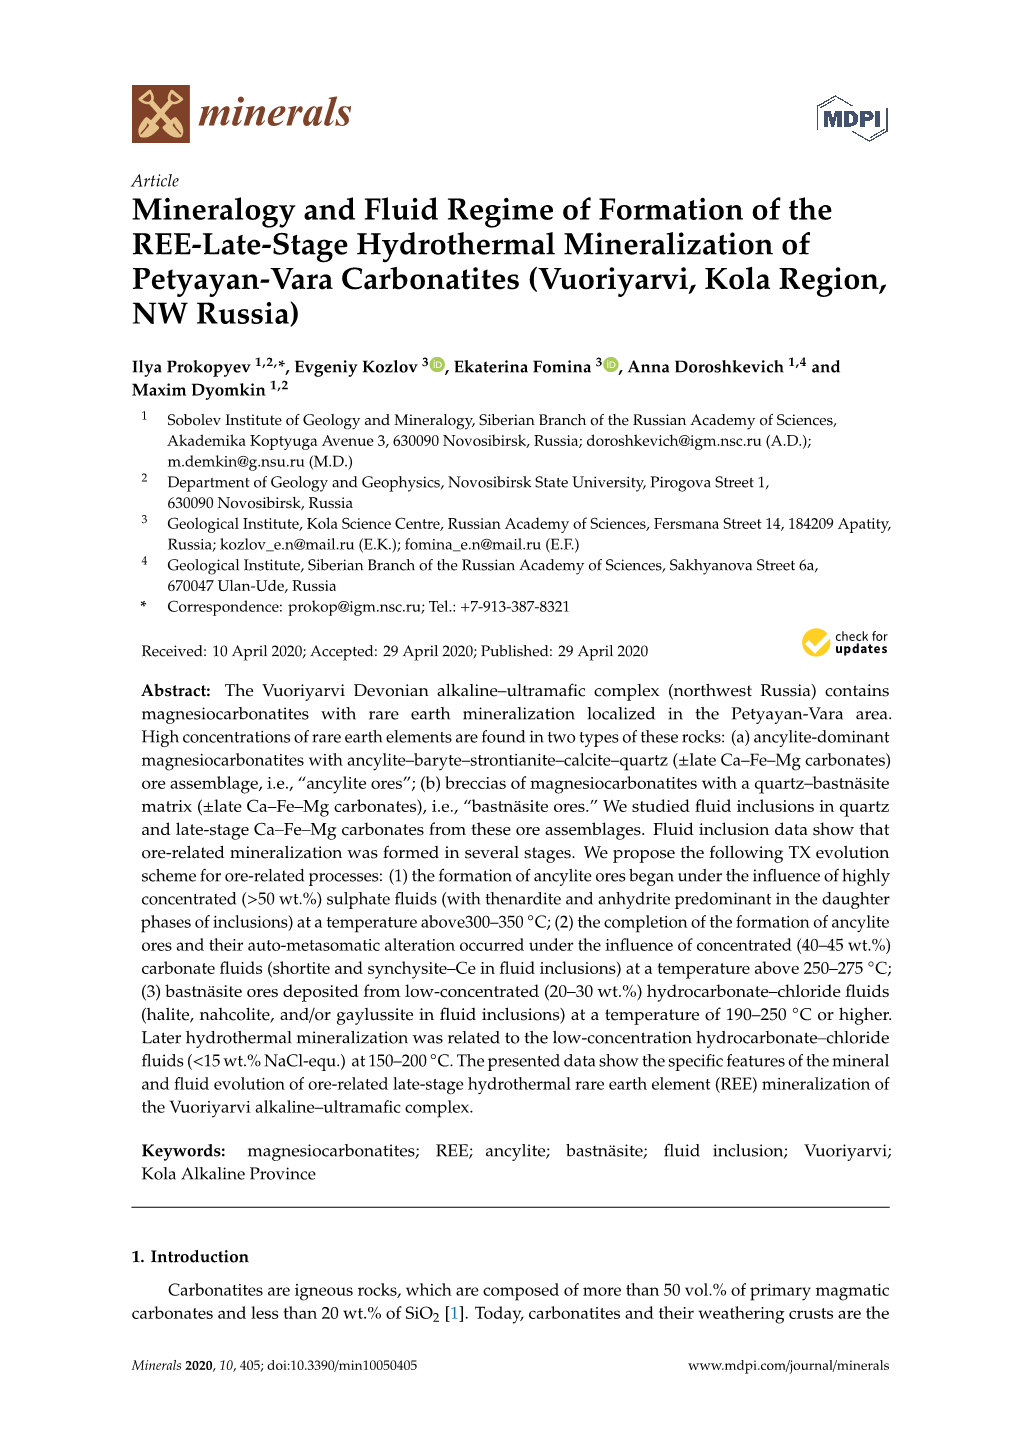 Mineralogy and Fluid Regime of Formation of the REE-Late-Stage Hydrothermal Mineralization of Petyayan-Vara Carbonatites (Vuoriyarvi, Kola Region, NW Russia)